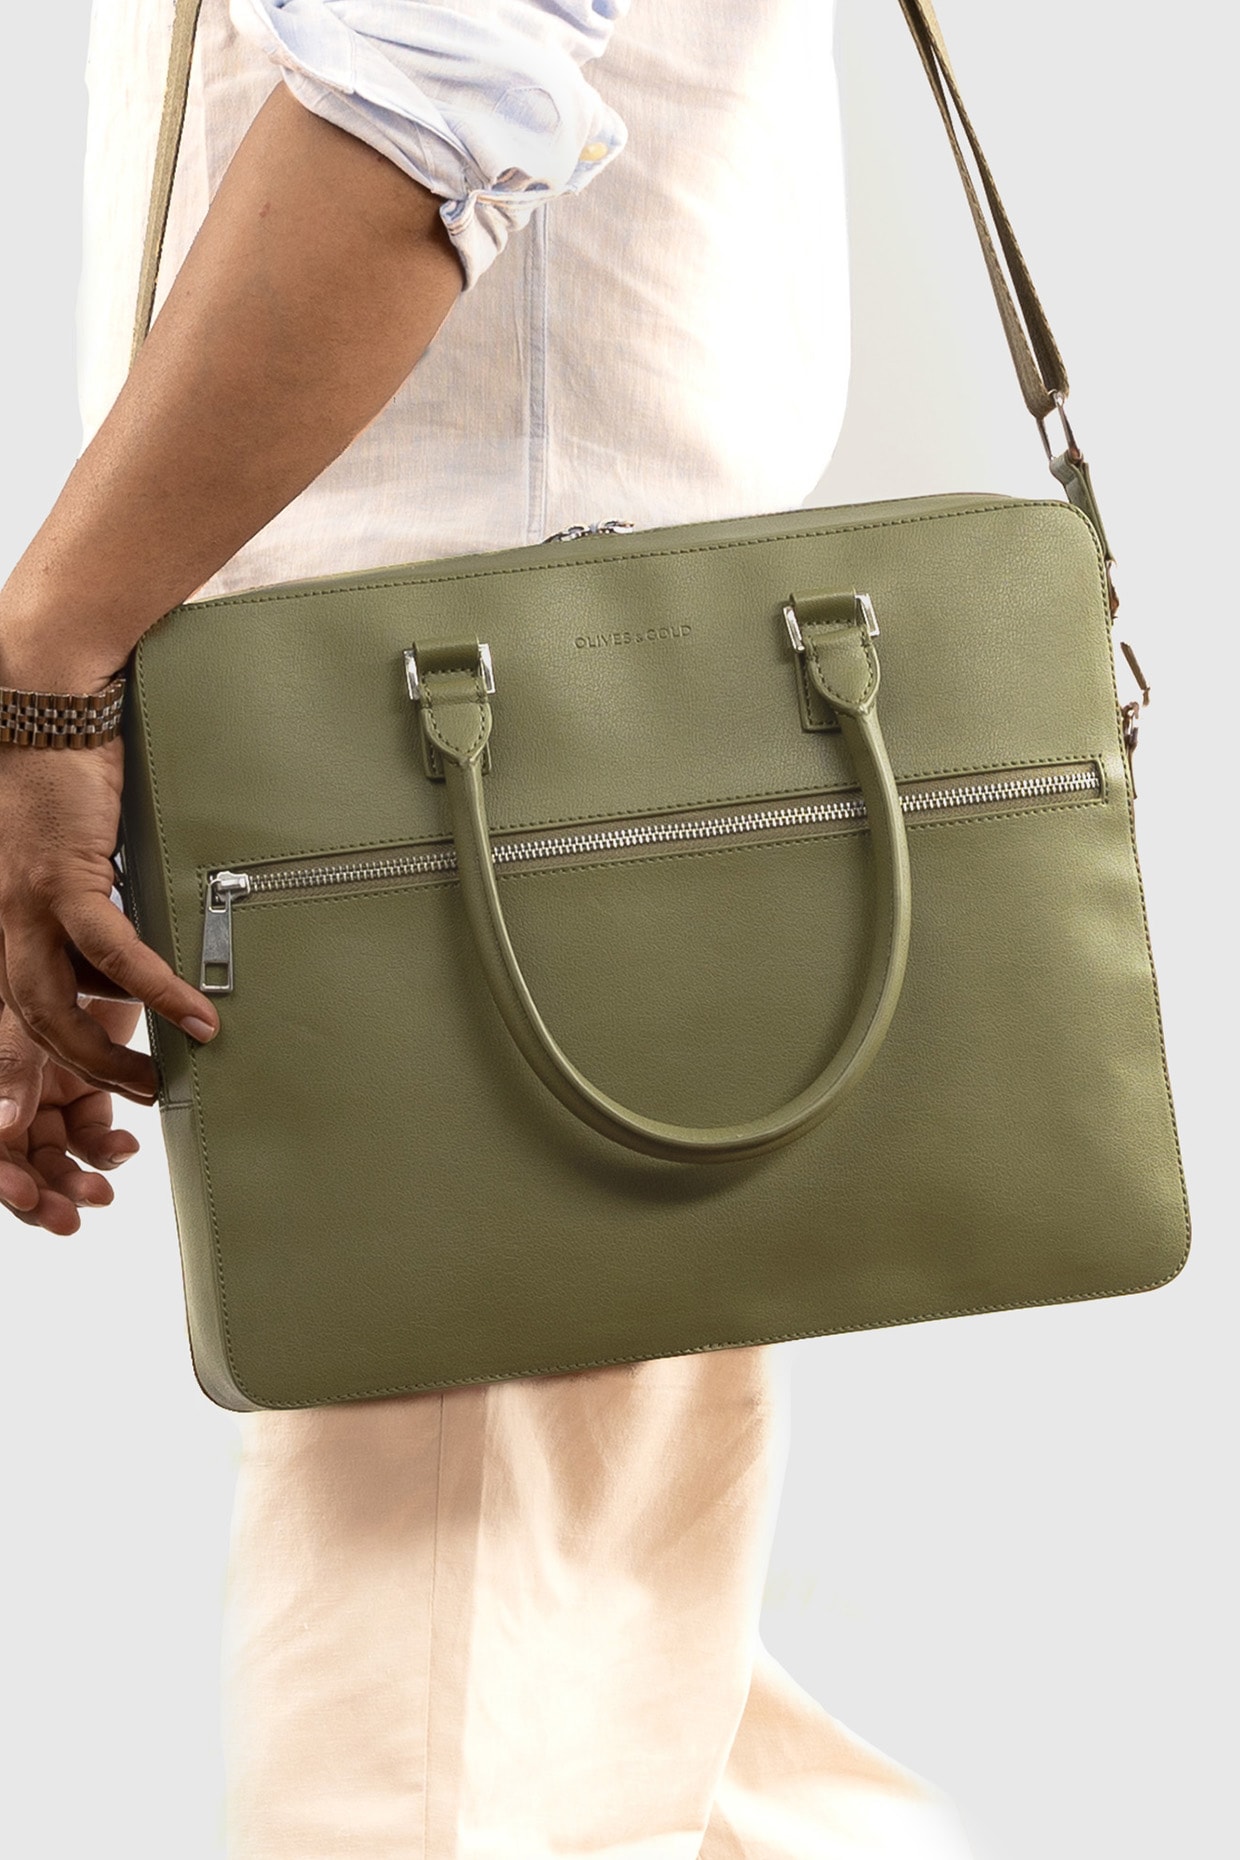 Amalfi Olive Green Suede Fringe Handbags | anatmarin